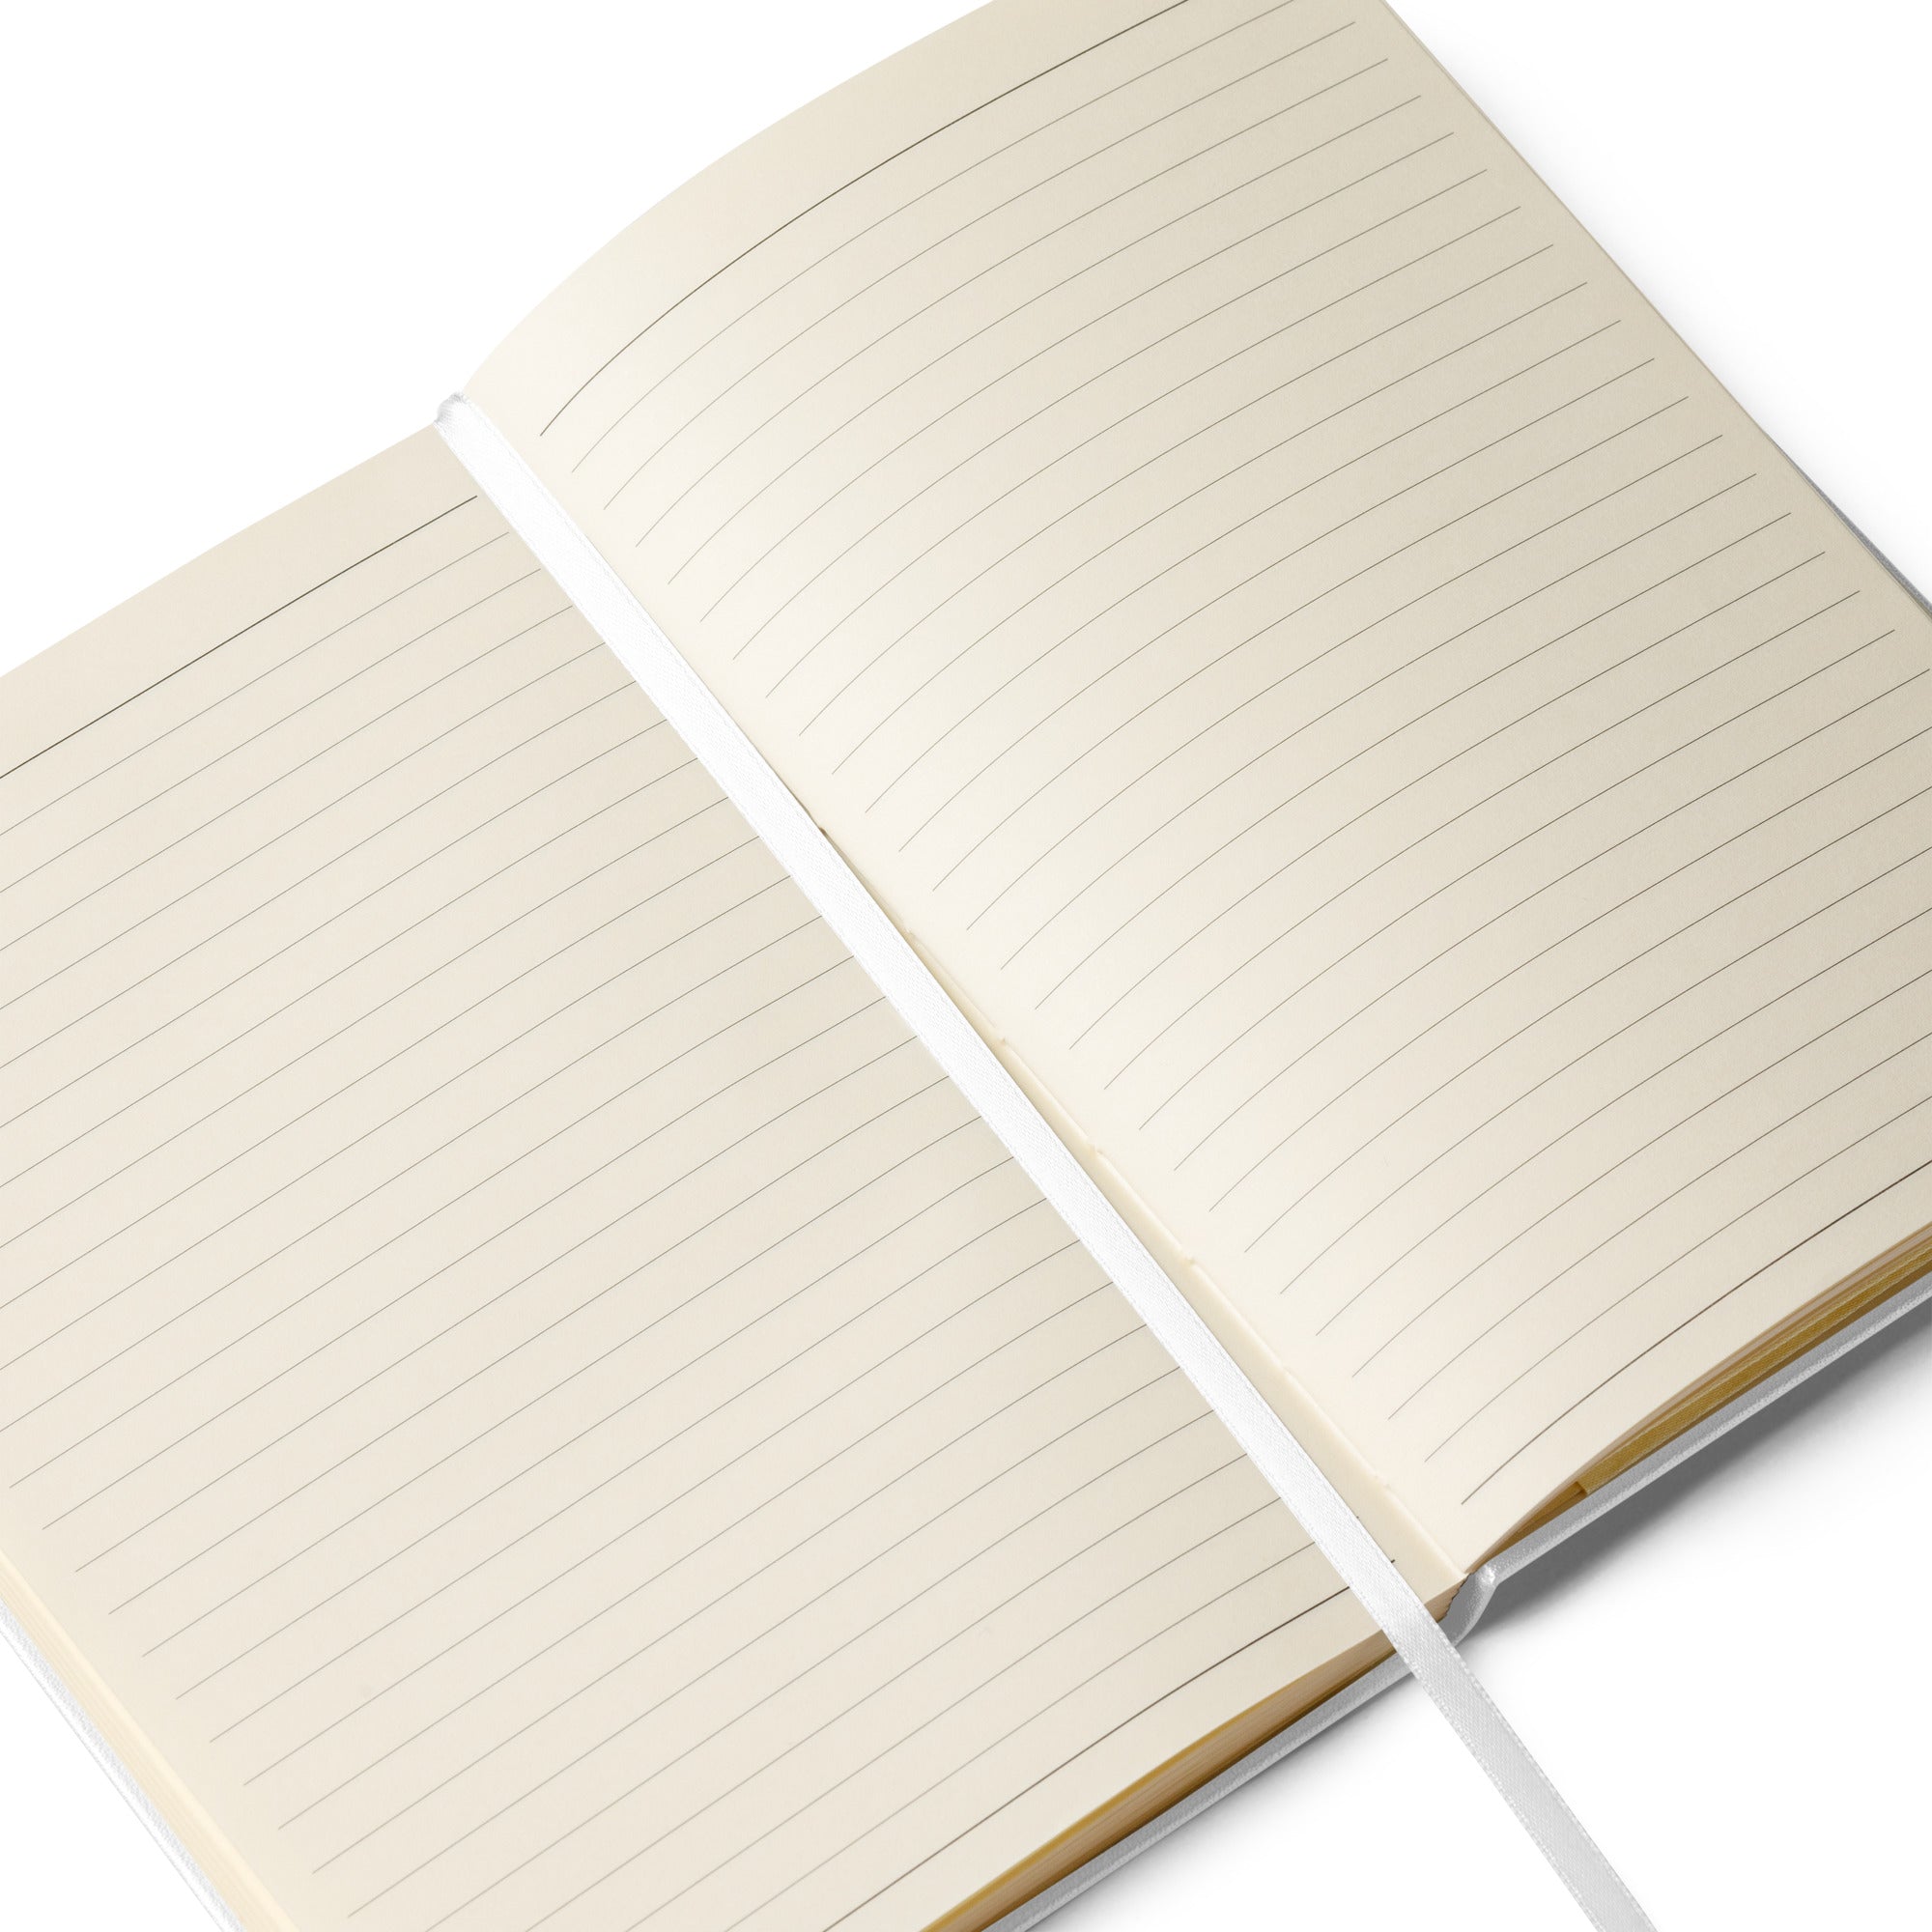 The (original) Whitney Hardcover Notebook